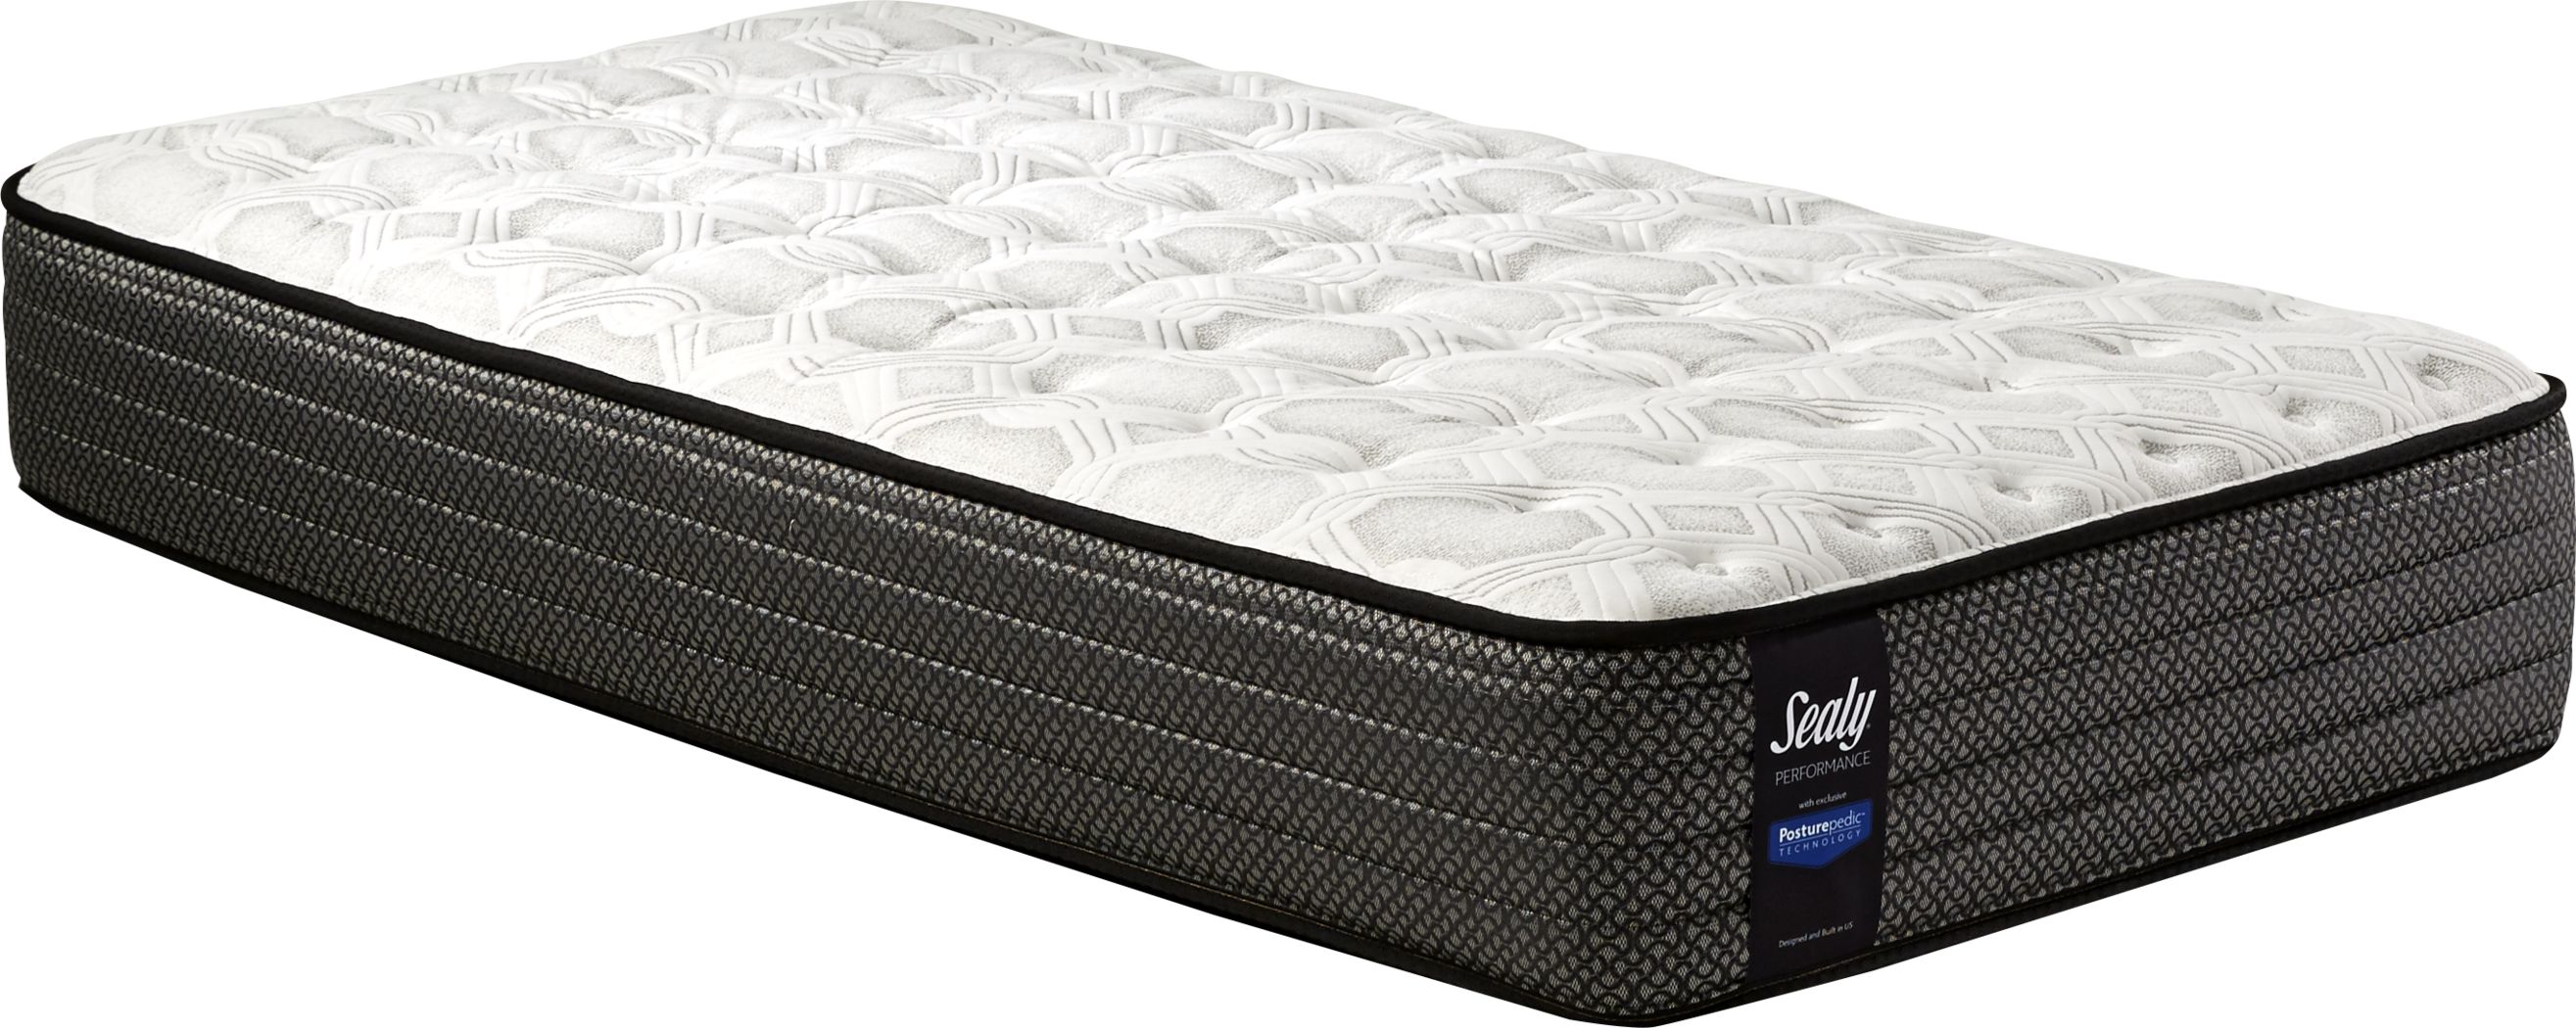 sealy performance humboldt firm pillowtop mattress